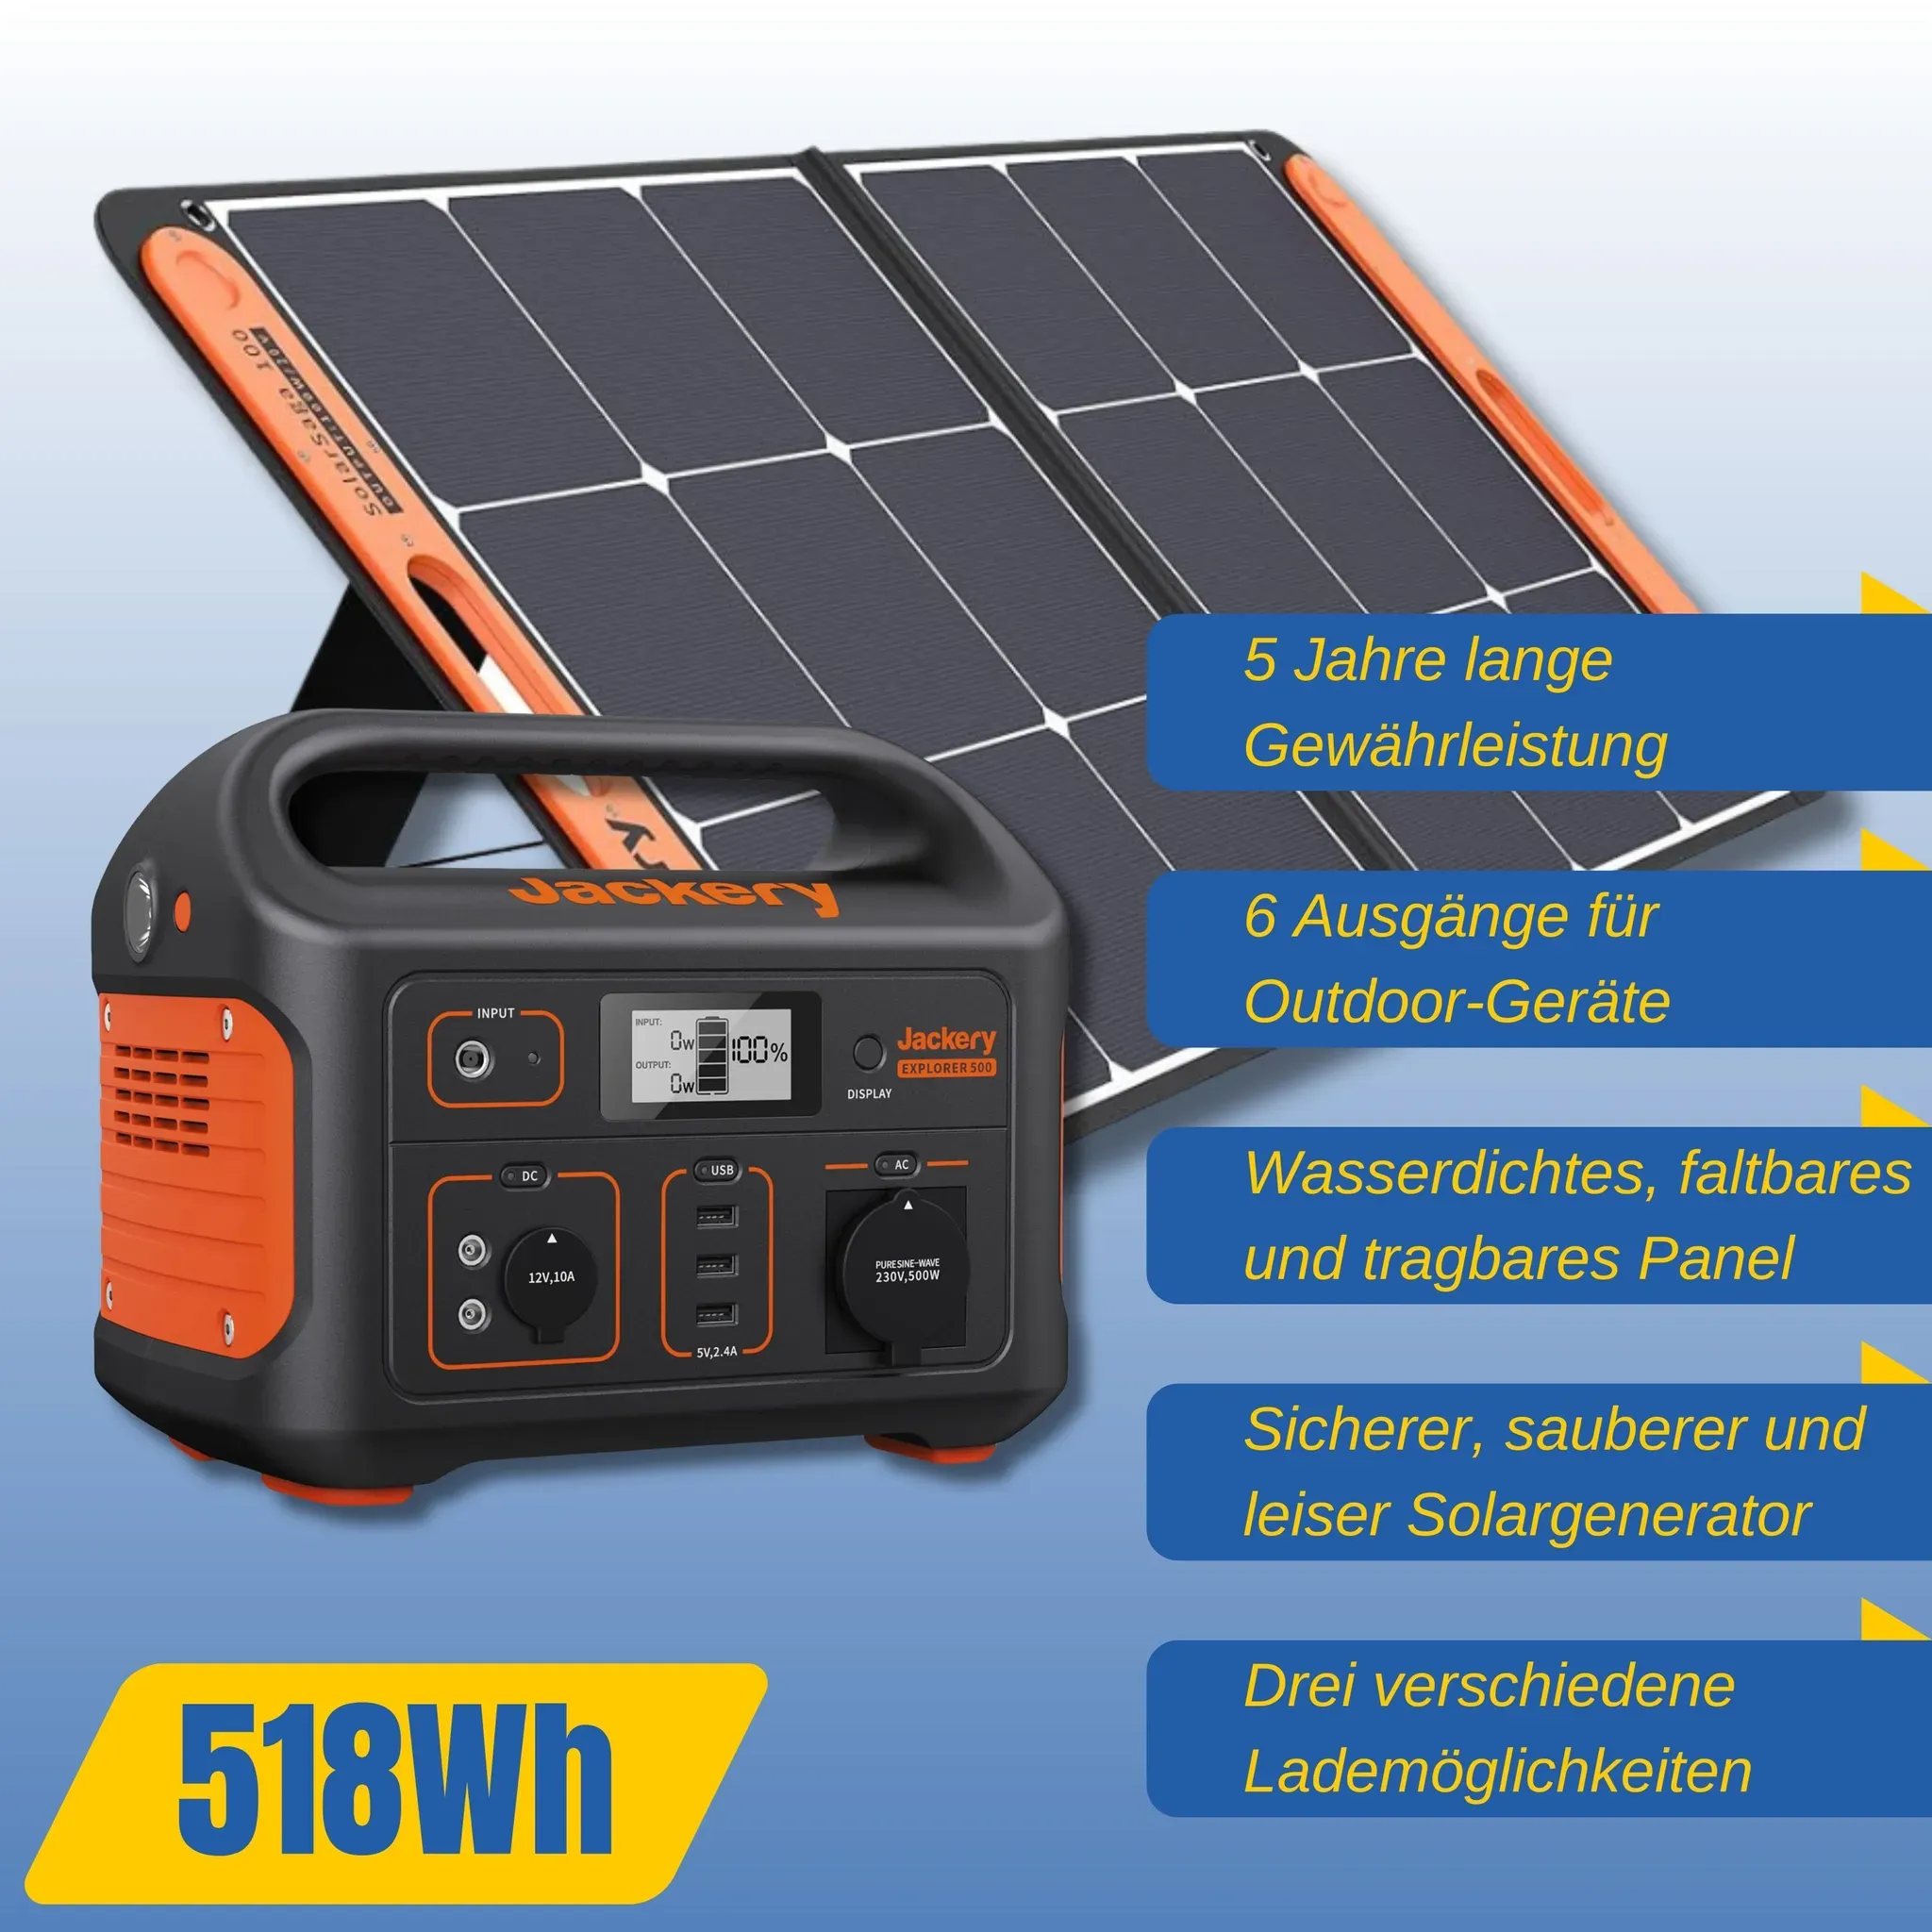 Jackery Explorer 500 Set - Tragbare Powerstation mit Saga 100W Solarpanel